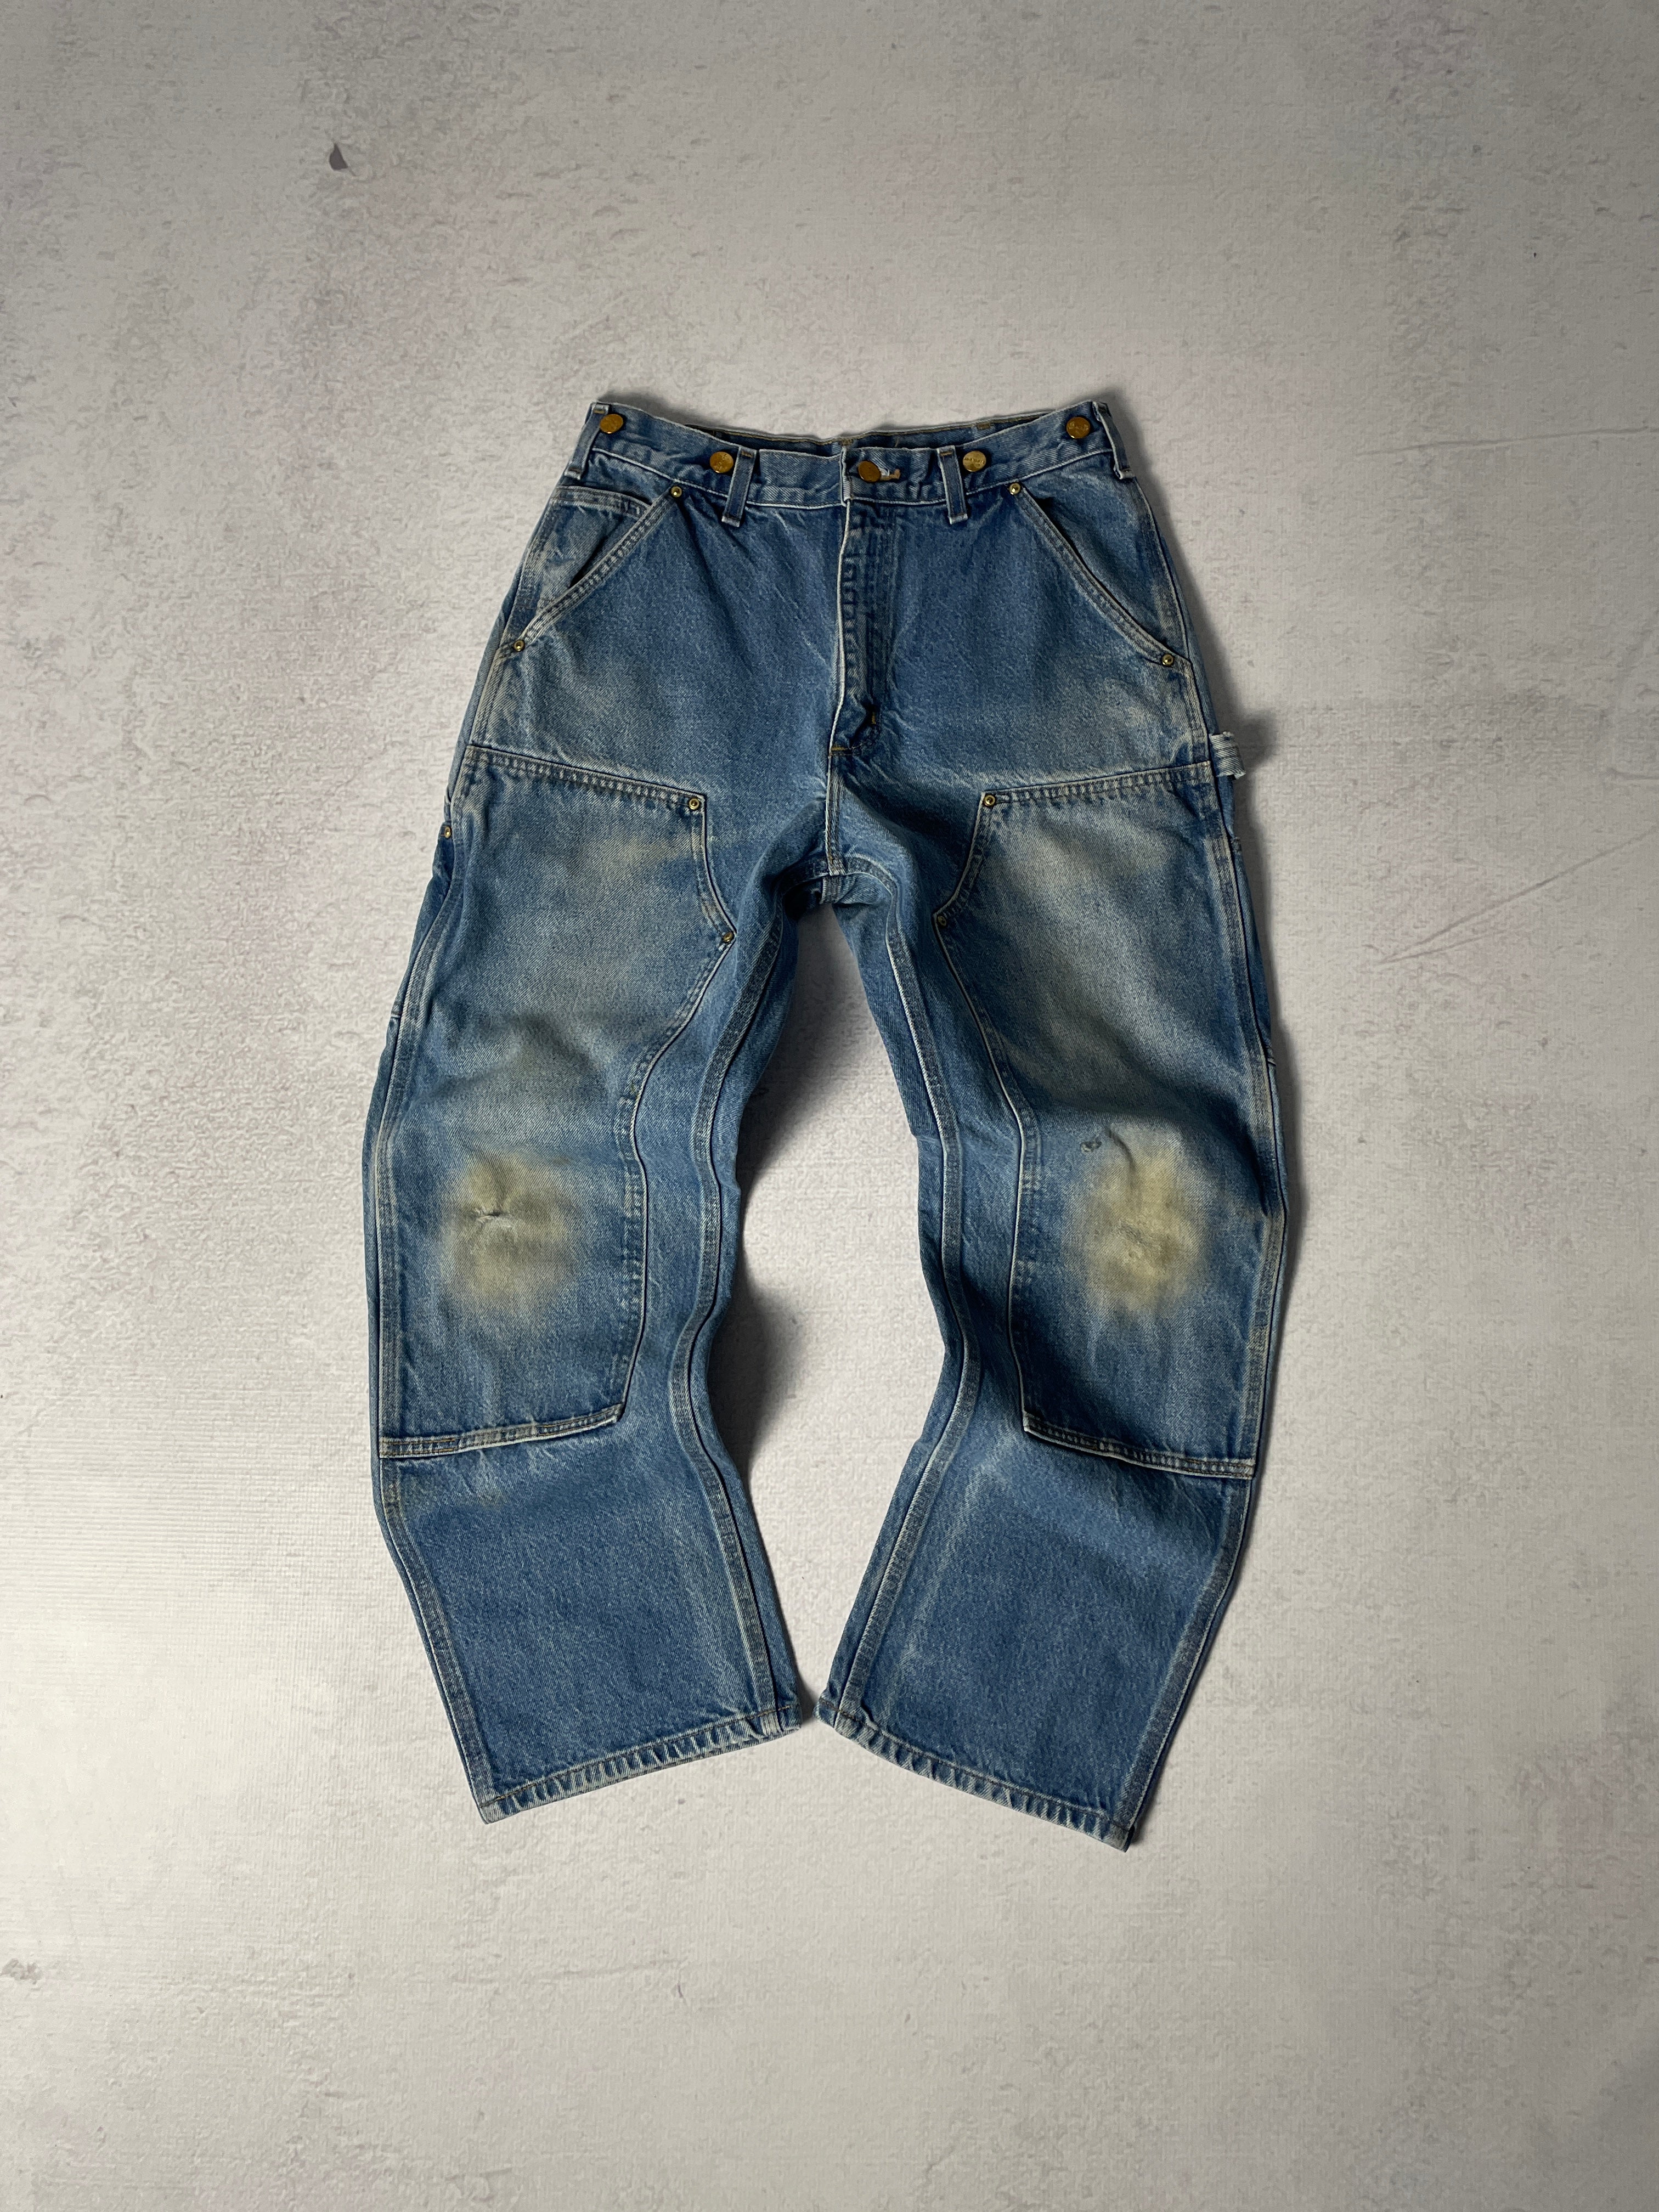 Vintage Carhartt Double Knee Jeans - Men's 32 x 30